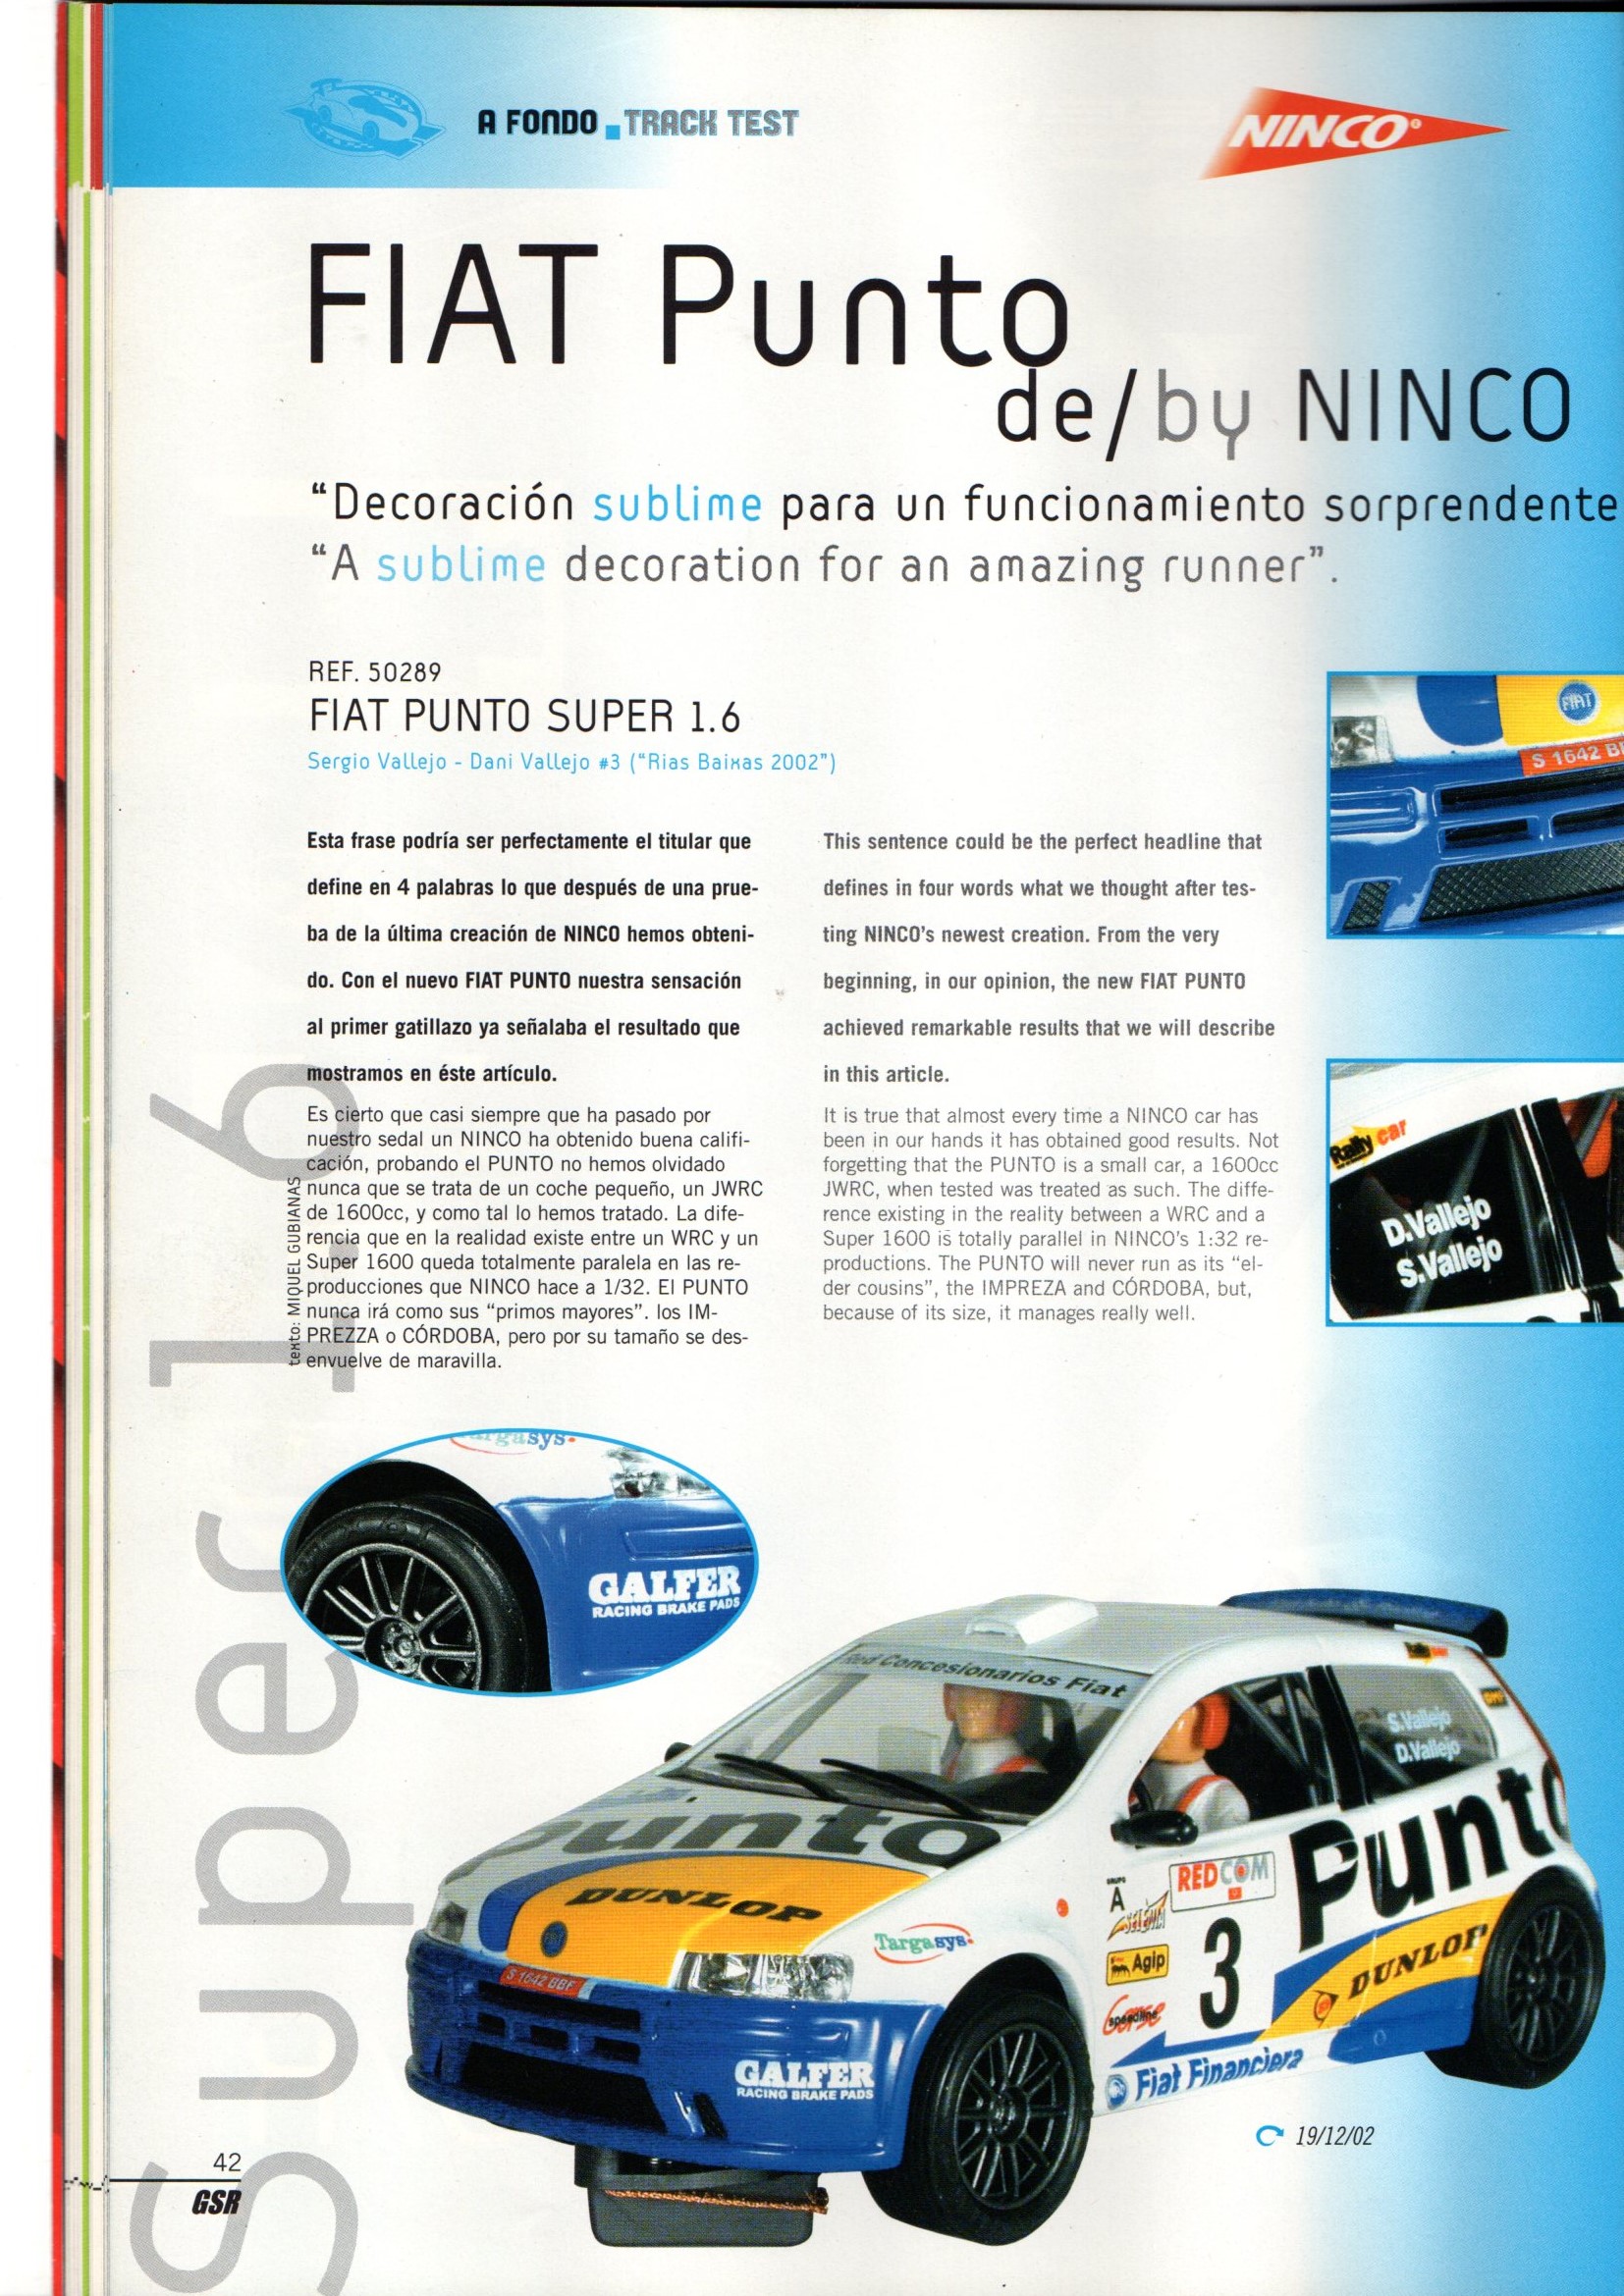 Fiat Punto (50289